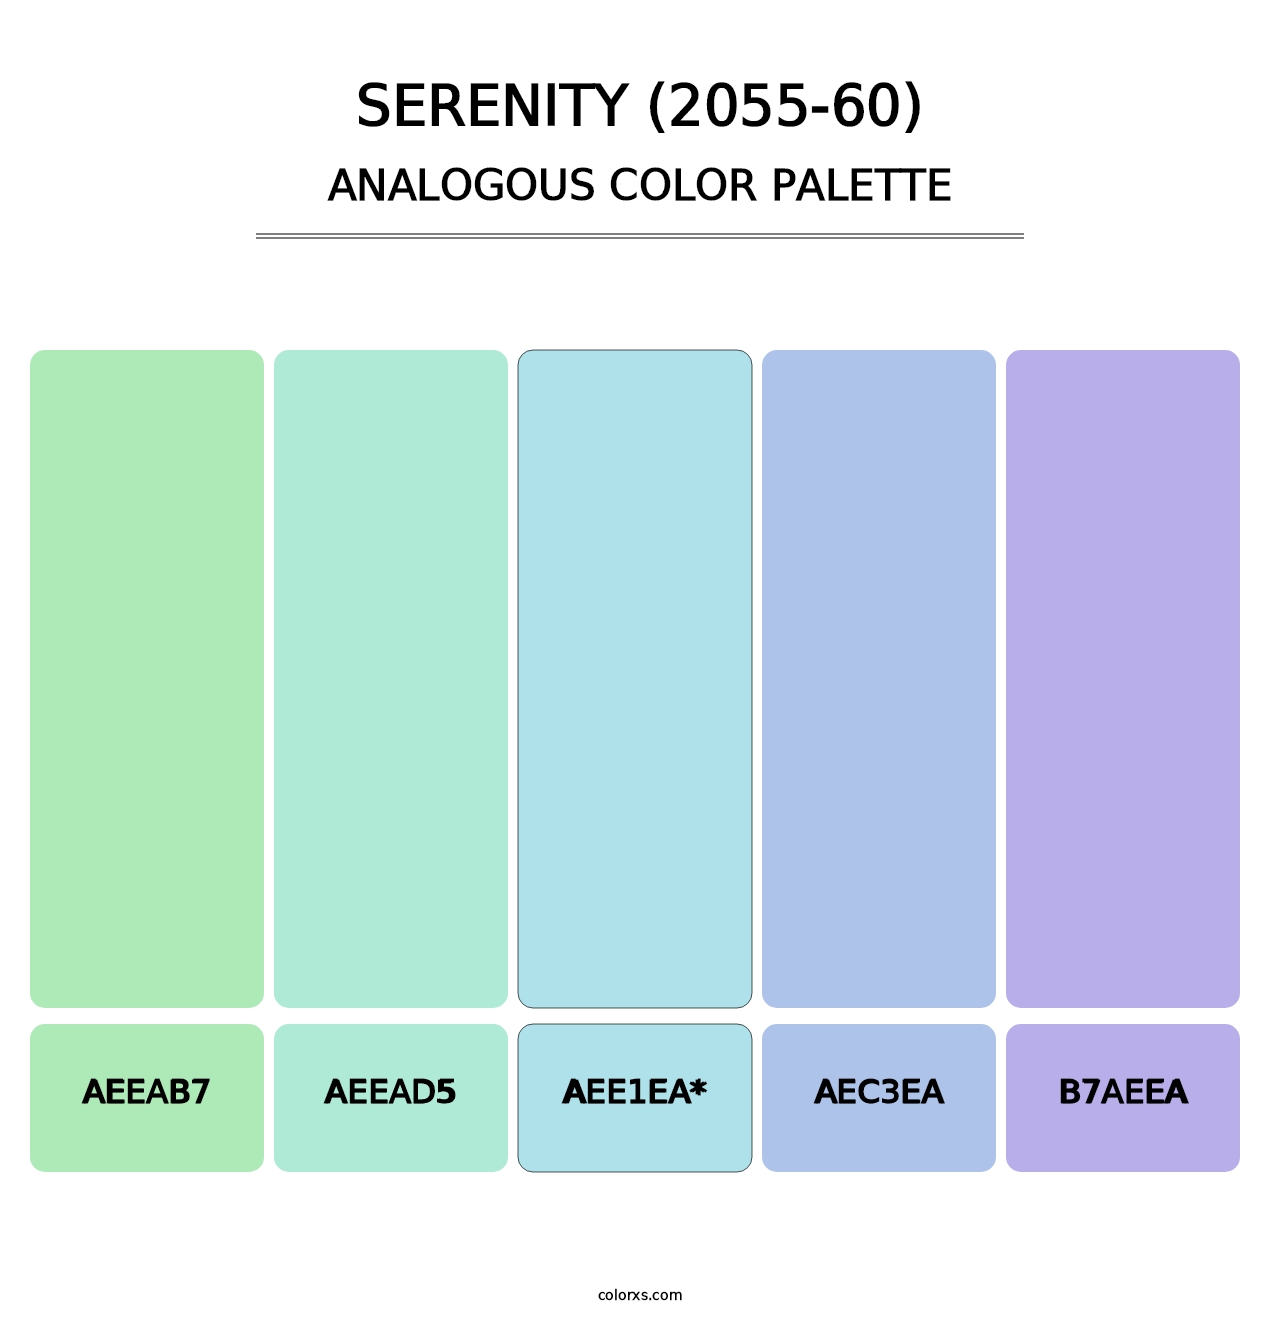 Serenity (2055-60) - Analogous Color Palette